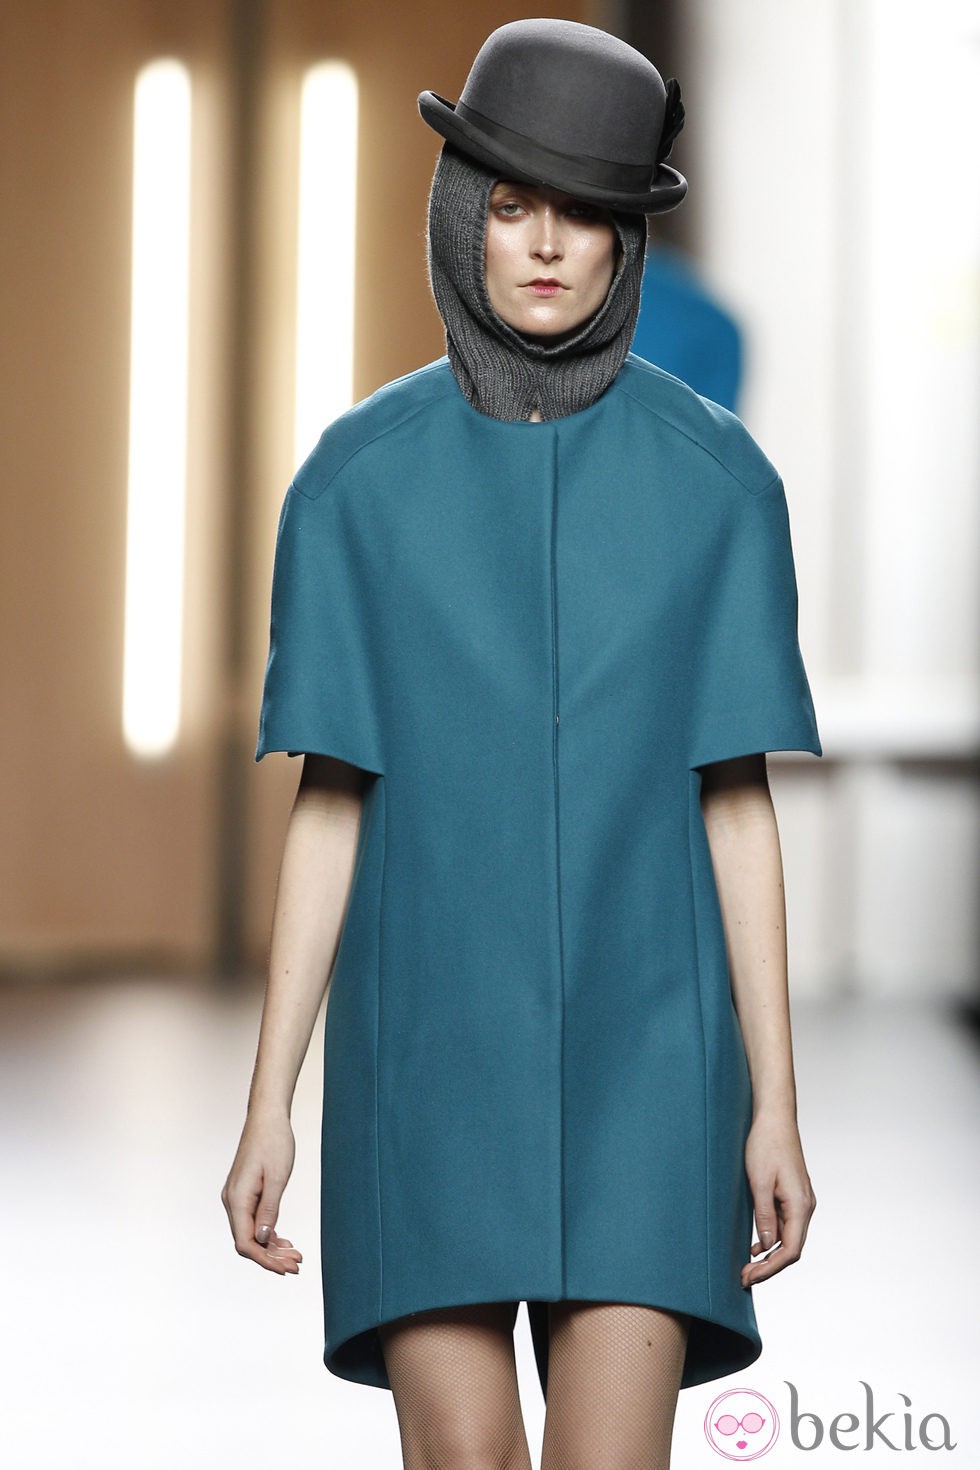 Abrigo de paño liso en color azul de Ana Locking en Fashion Week Madrid